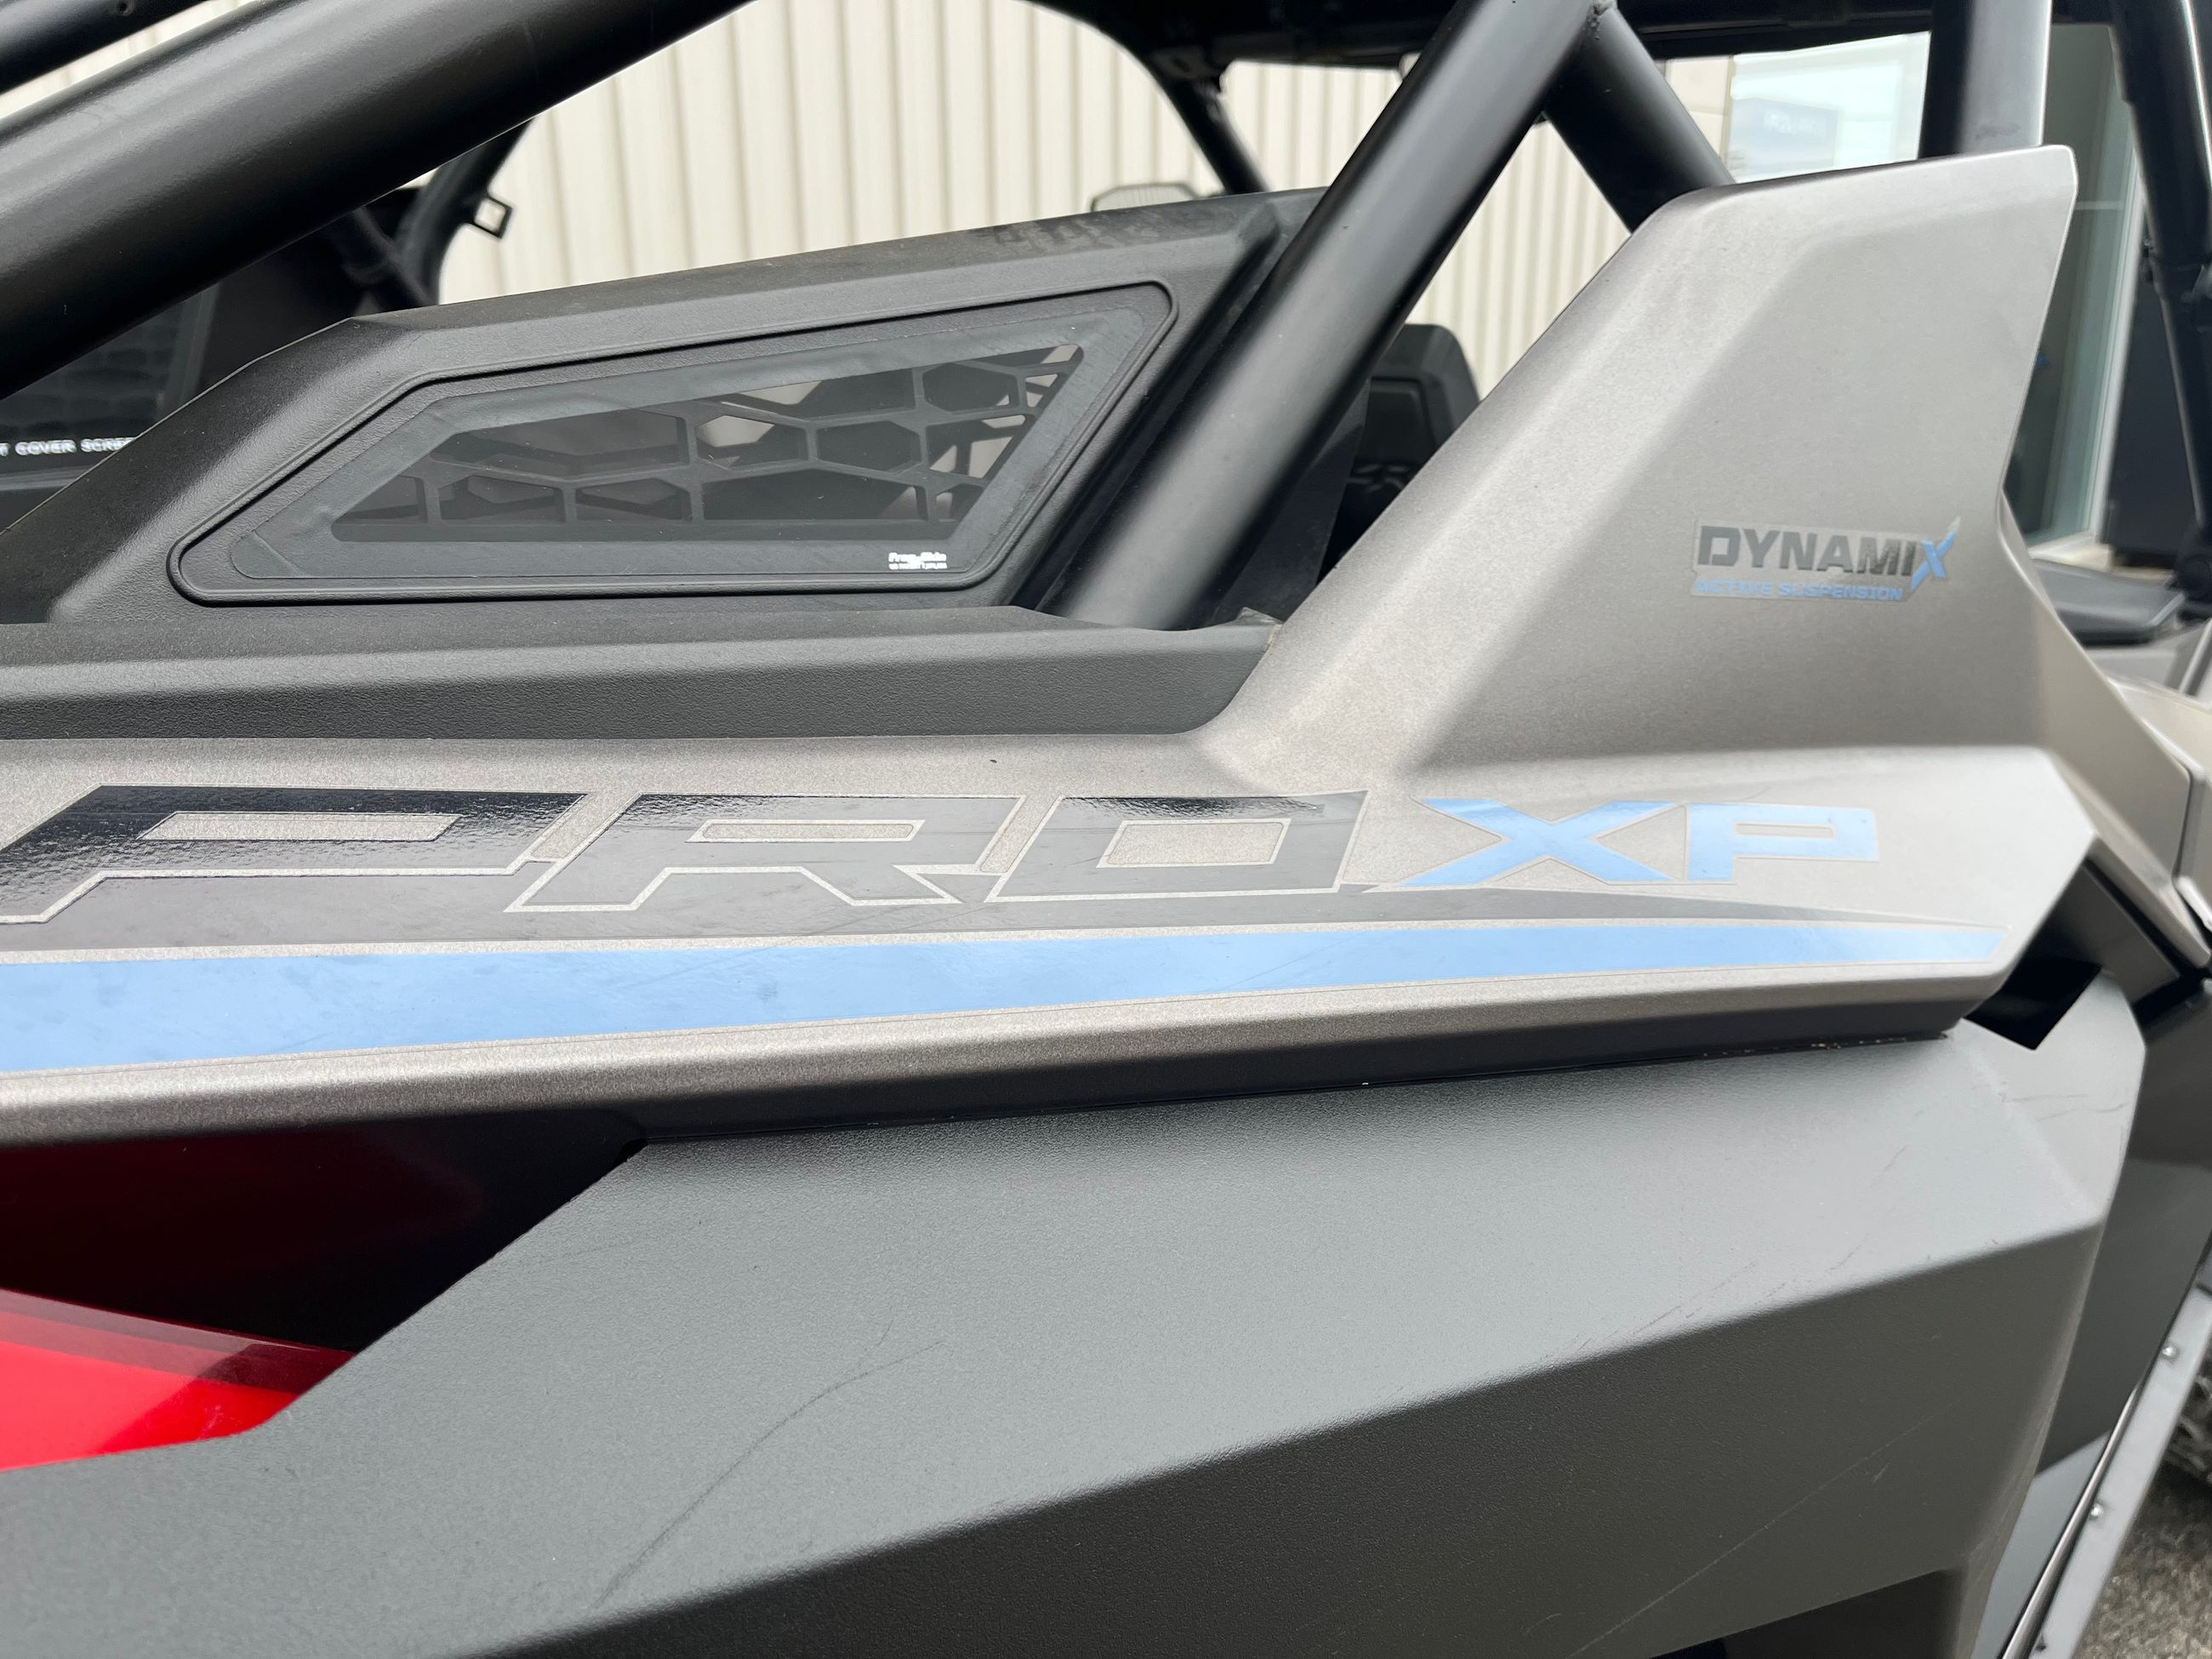 Polaris RZR Pro XP Ultimate Dynamix Turbo 181Hp 2021